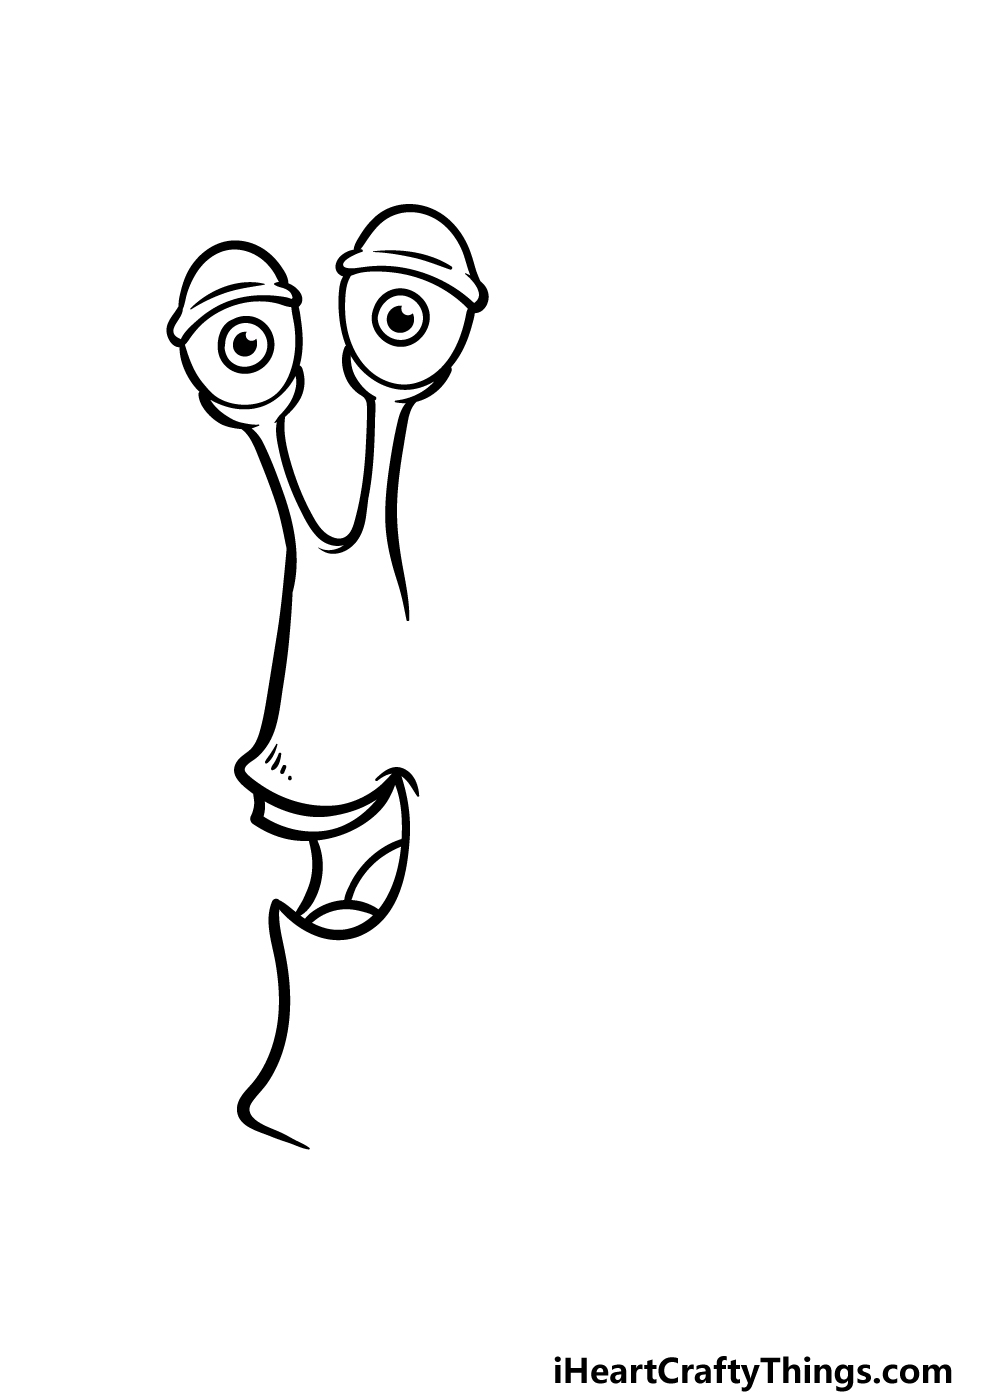 how to draw a cartoon snail step 2